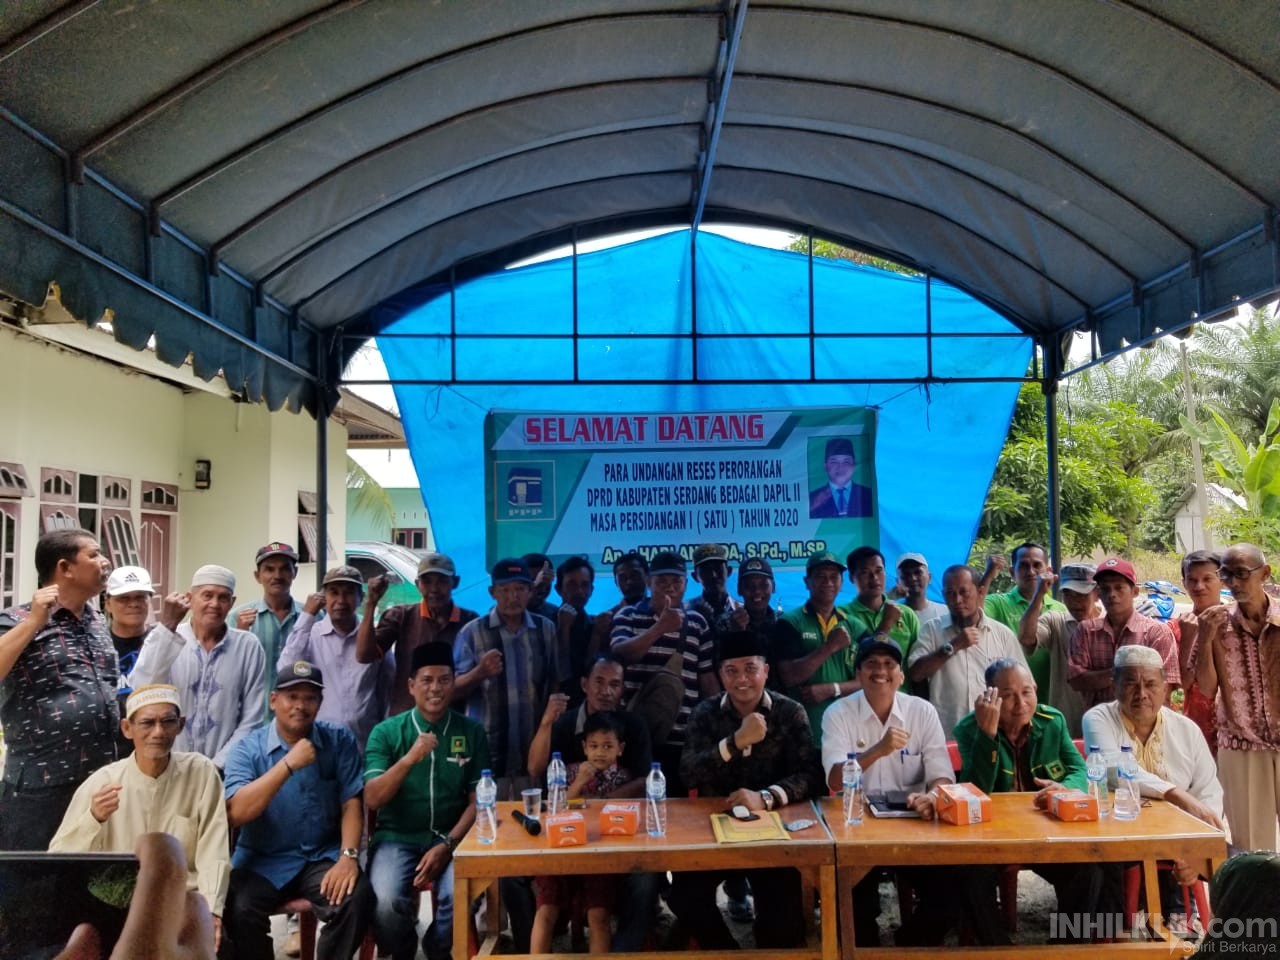 Hari Ananda Terjun ke Masyarakat Dalam Reses perorangan Dapil II Masa Persidangan 1 Tahun 2020